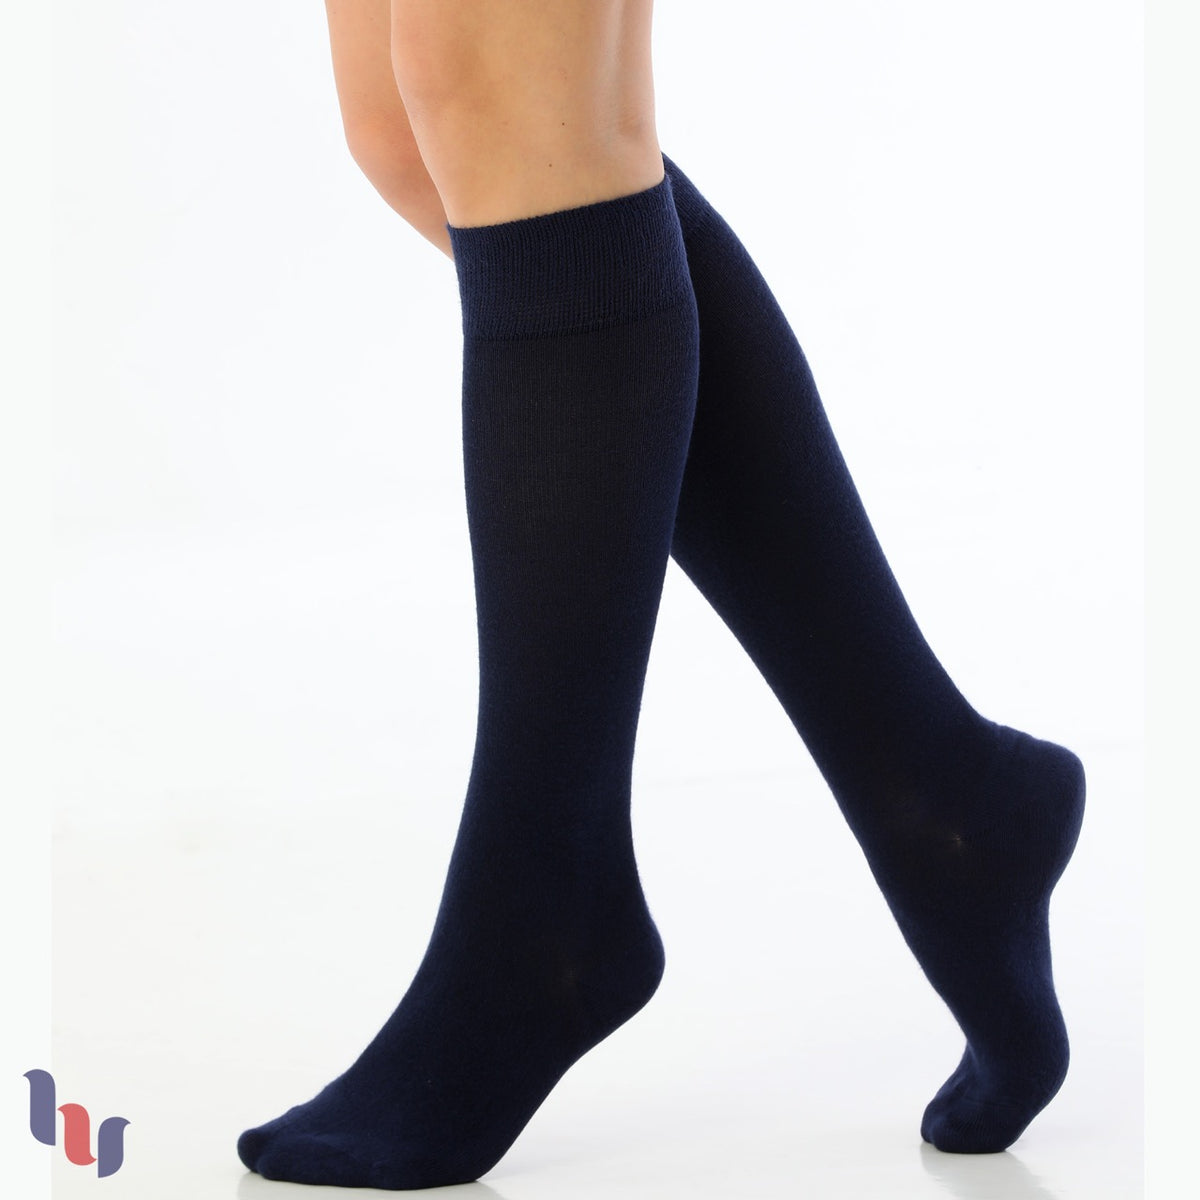 Women's Knee-High Cotton Dress Plain Socks, 4 Pairs